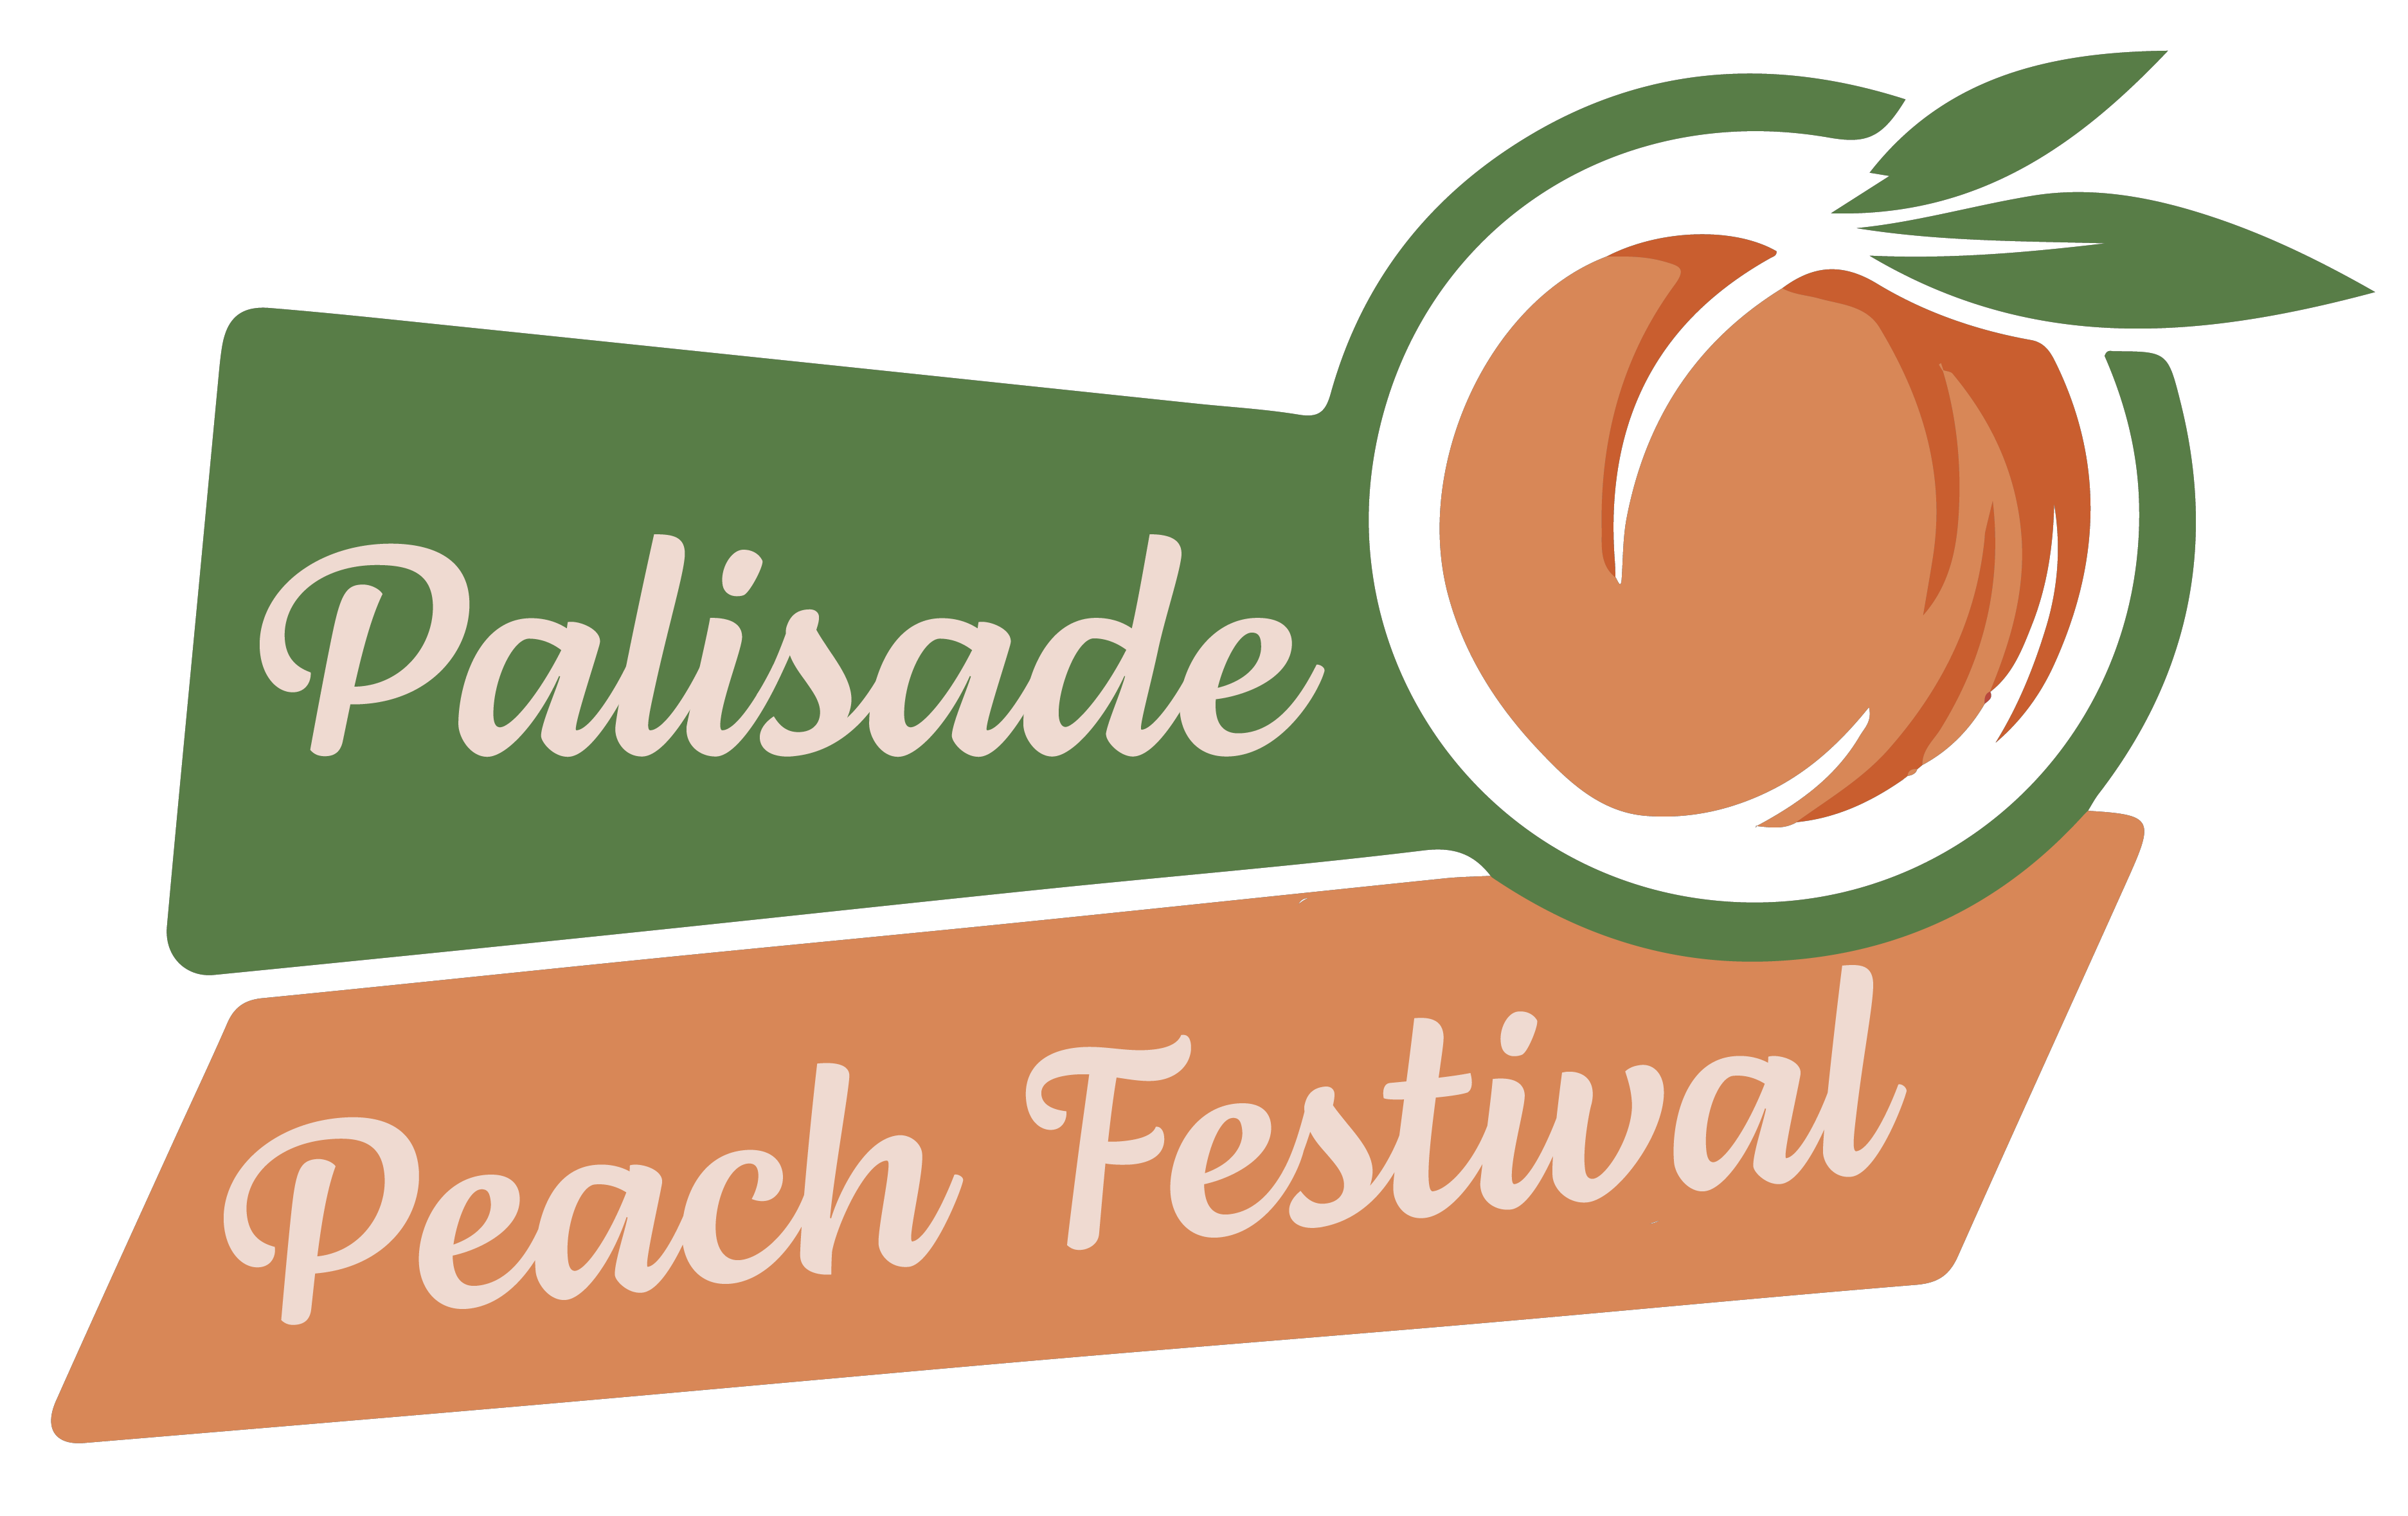 Palisade peach festival logo.